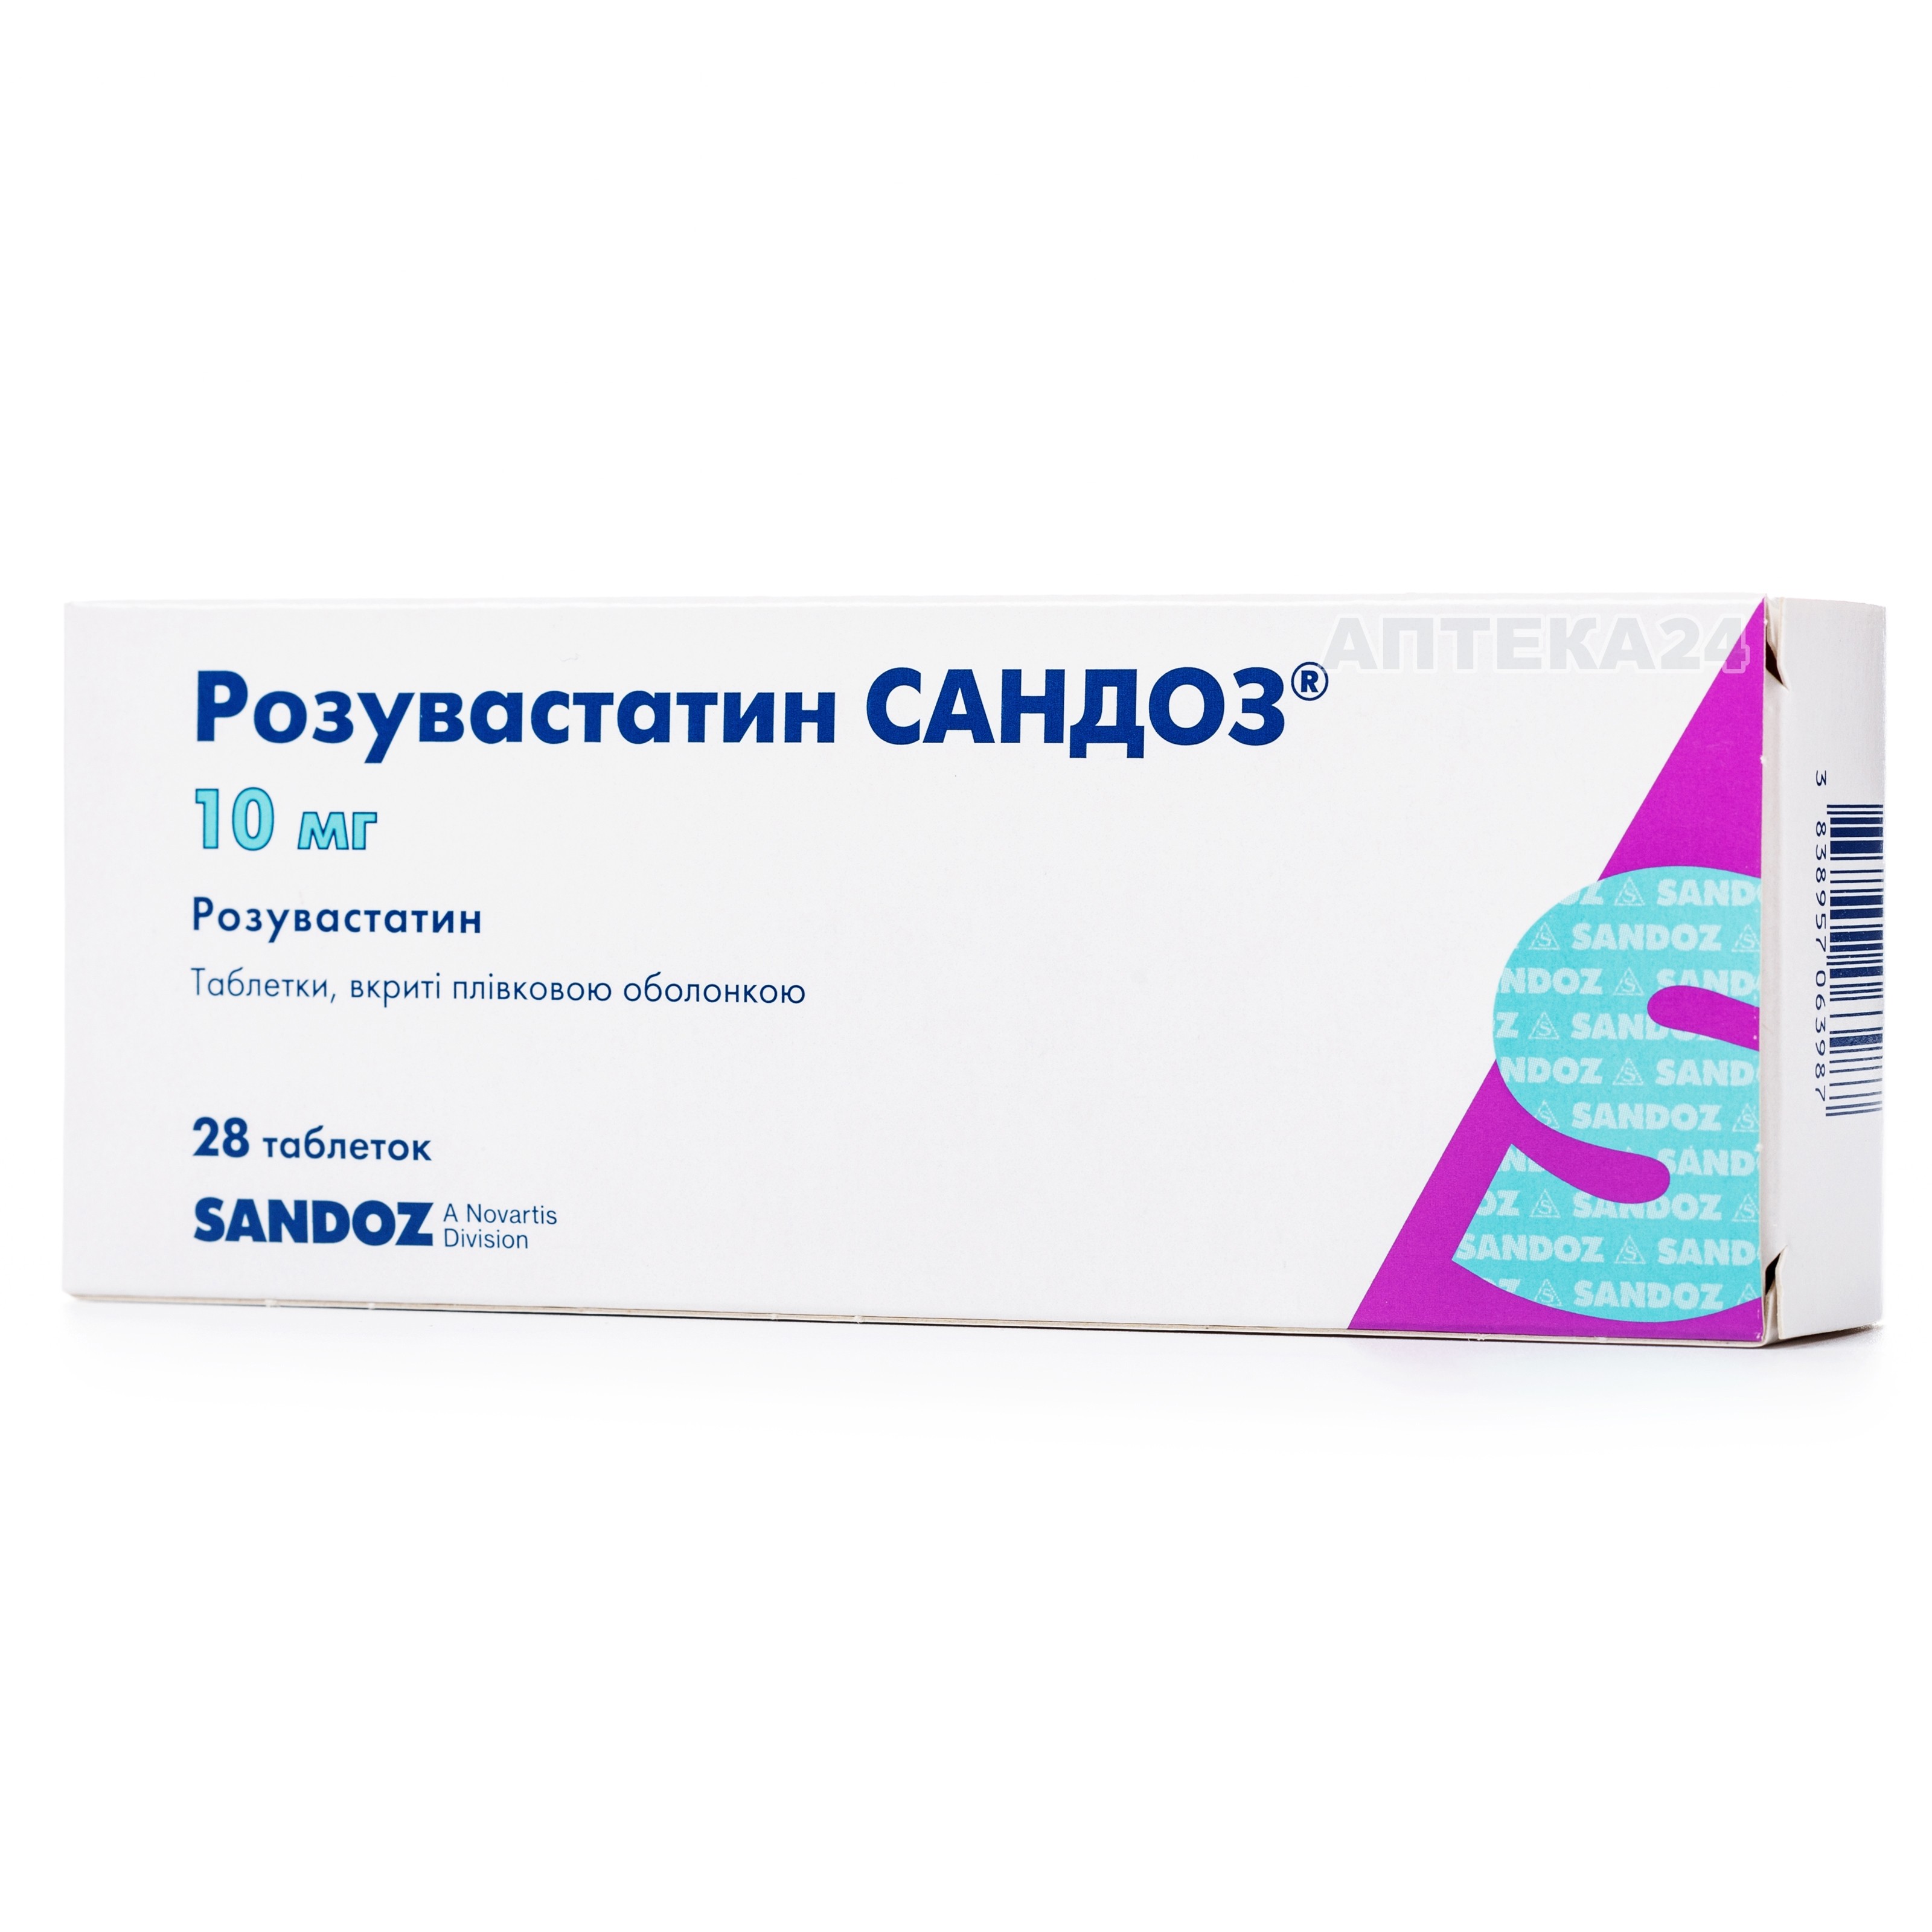 Аналоги препарата Розувастатин Сандоз таблетки 10 мг N28 - Sandoz: по .